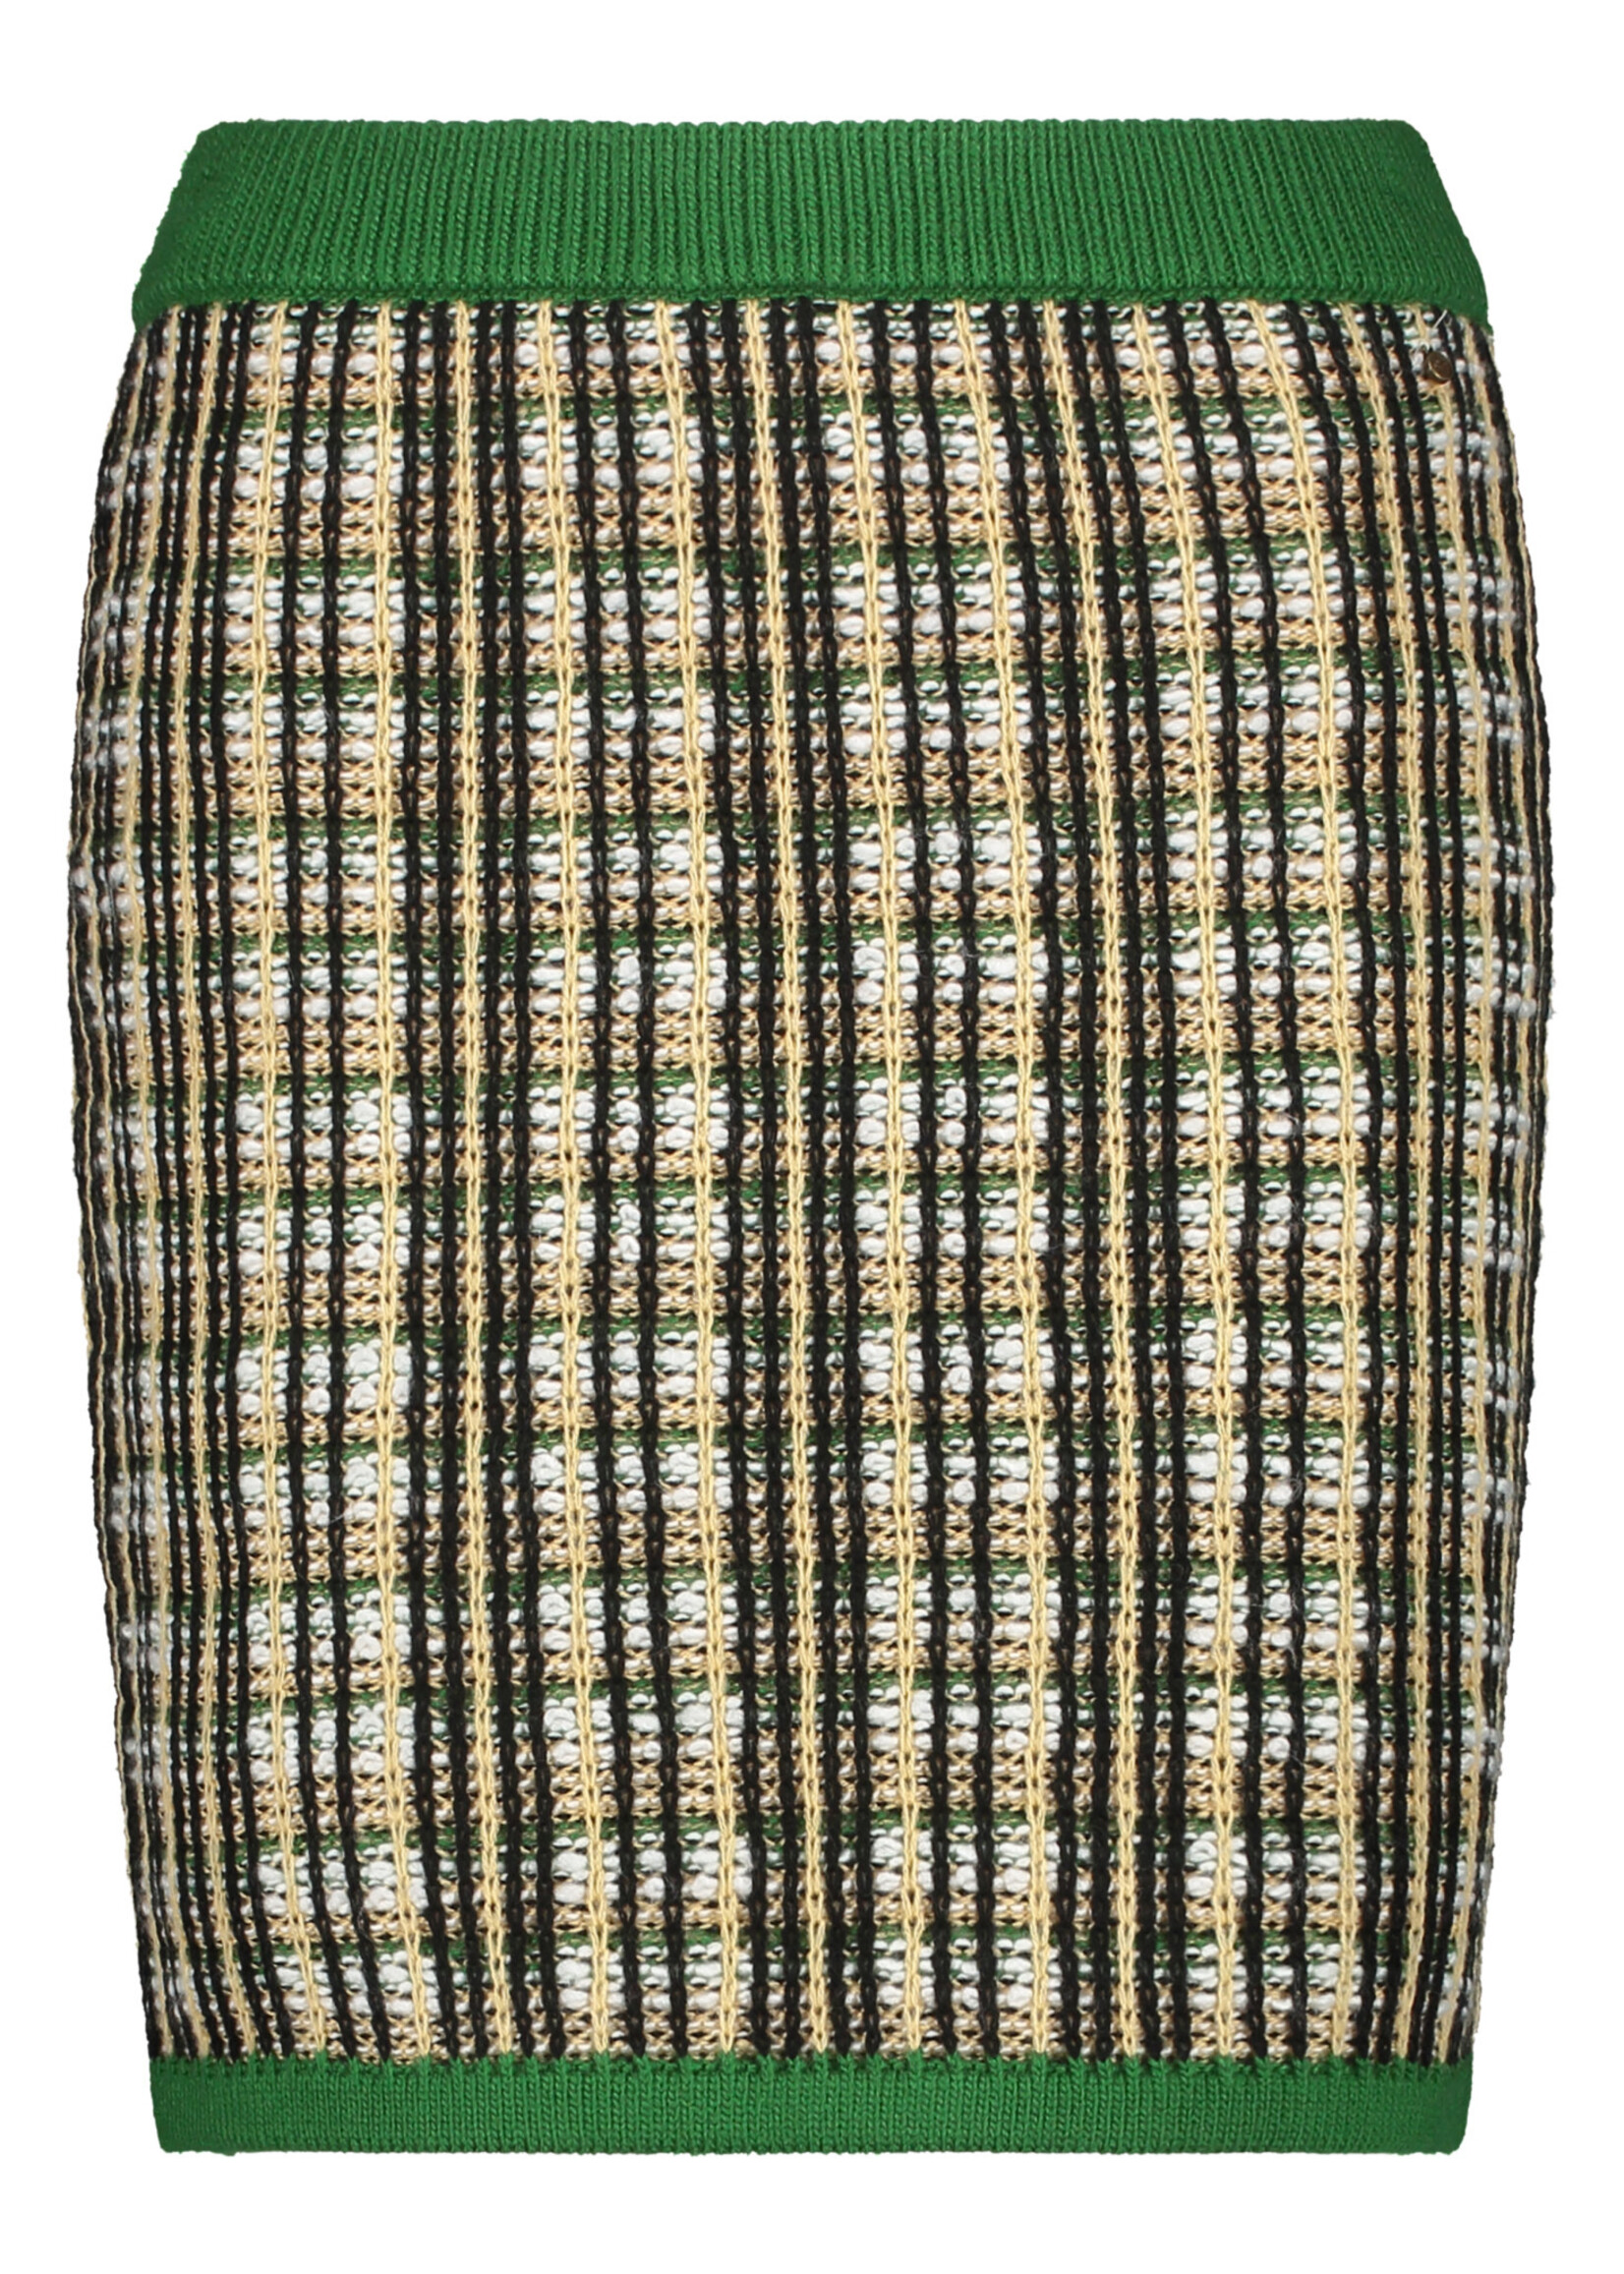 Tramontana Skirt Boucle Multi Colour Green